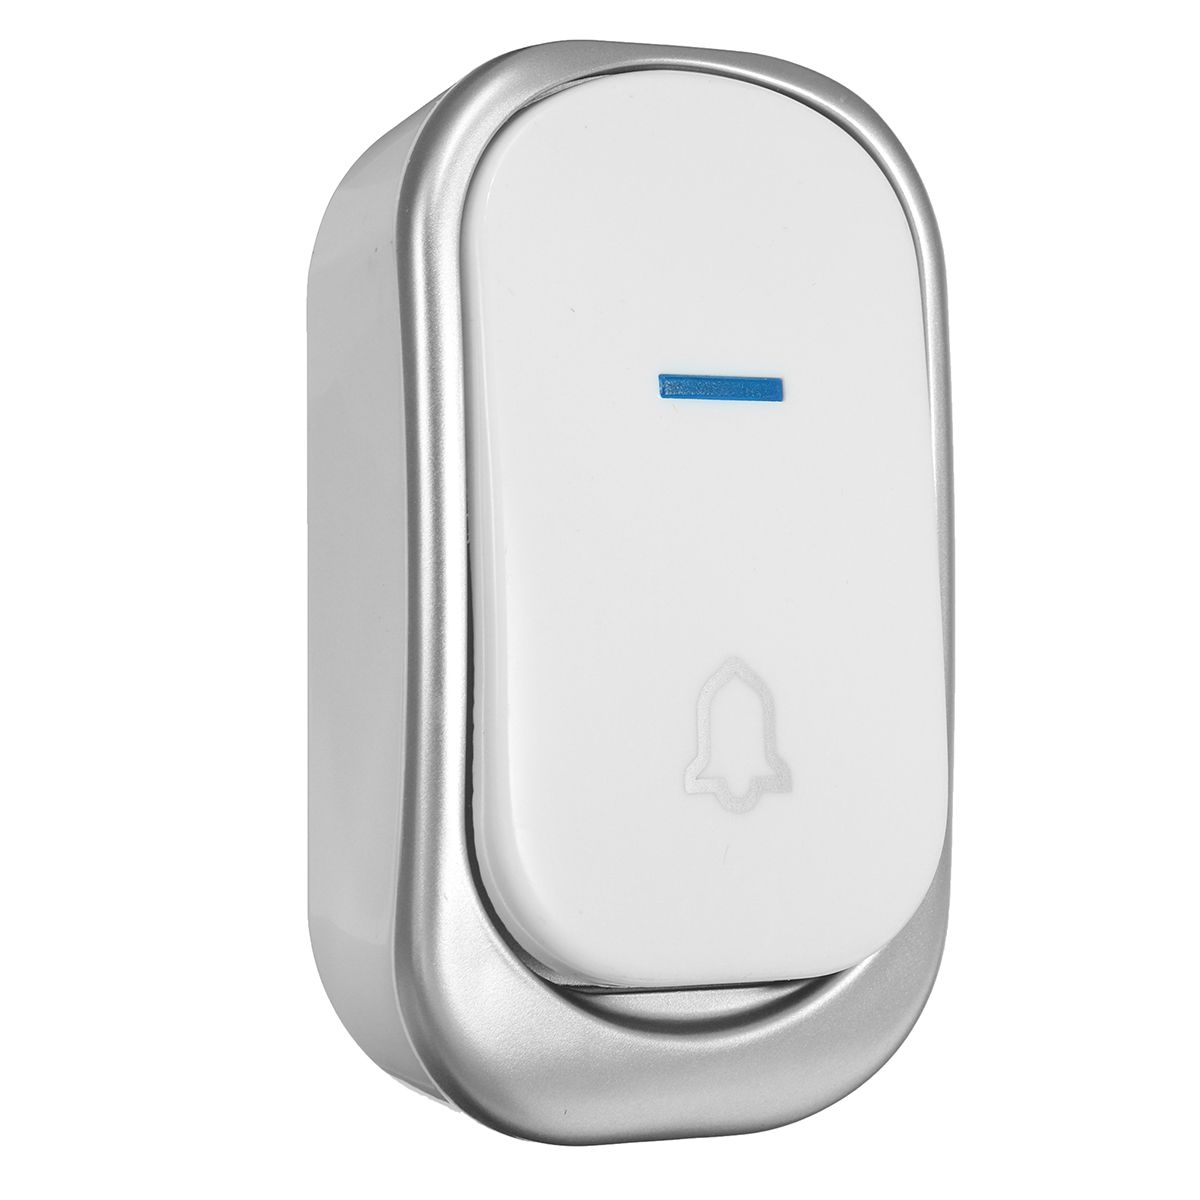 Waterproof-Wireless-Music-Doorbell-1-Receiver1-Transmitter-Chimes-Plug-in-Door-Bell-Kit-32-Song-1374567